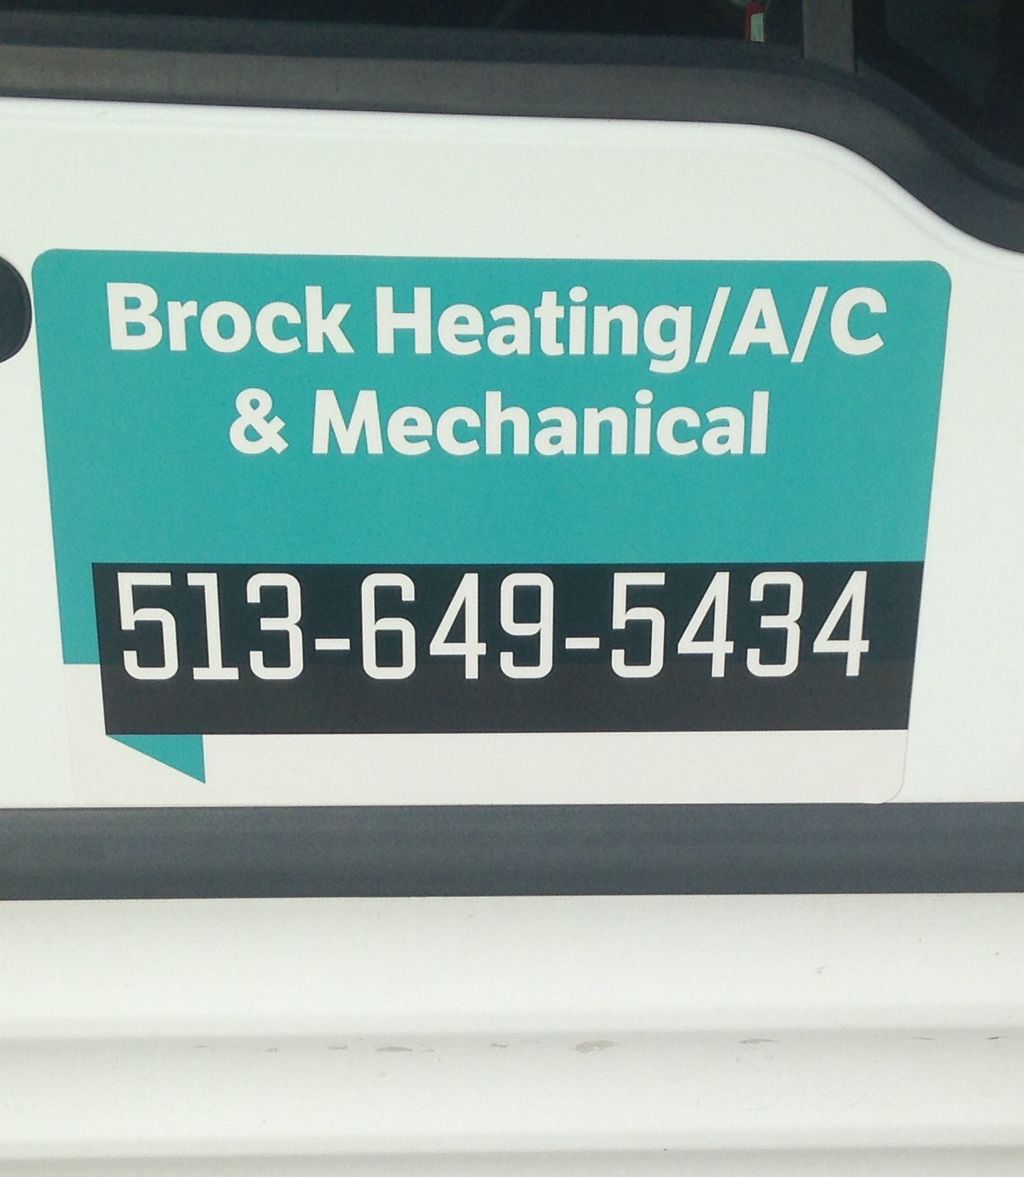 Brock Heating A/C & Mechanical